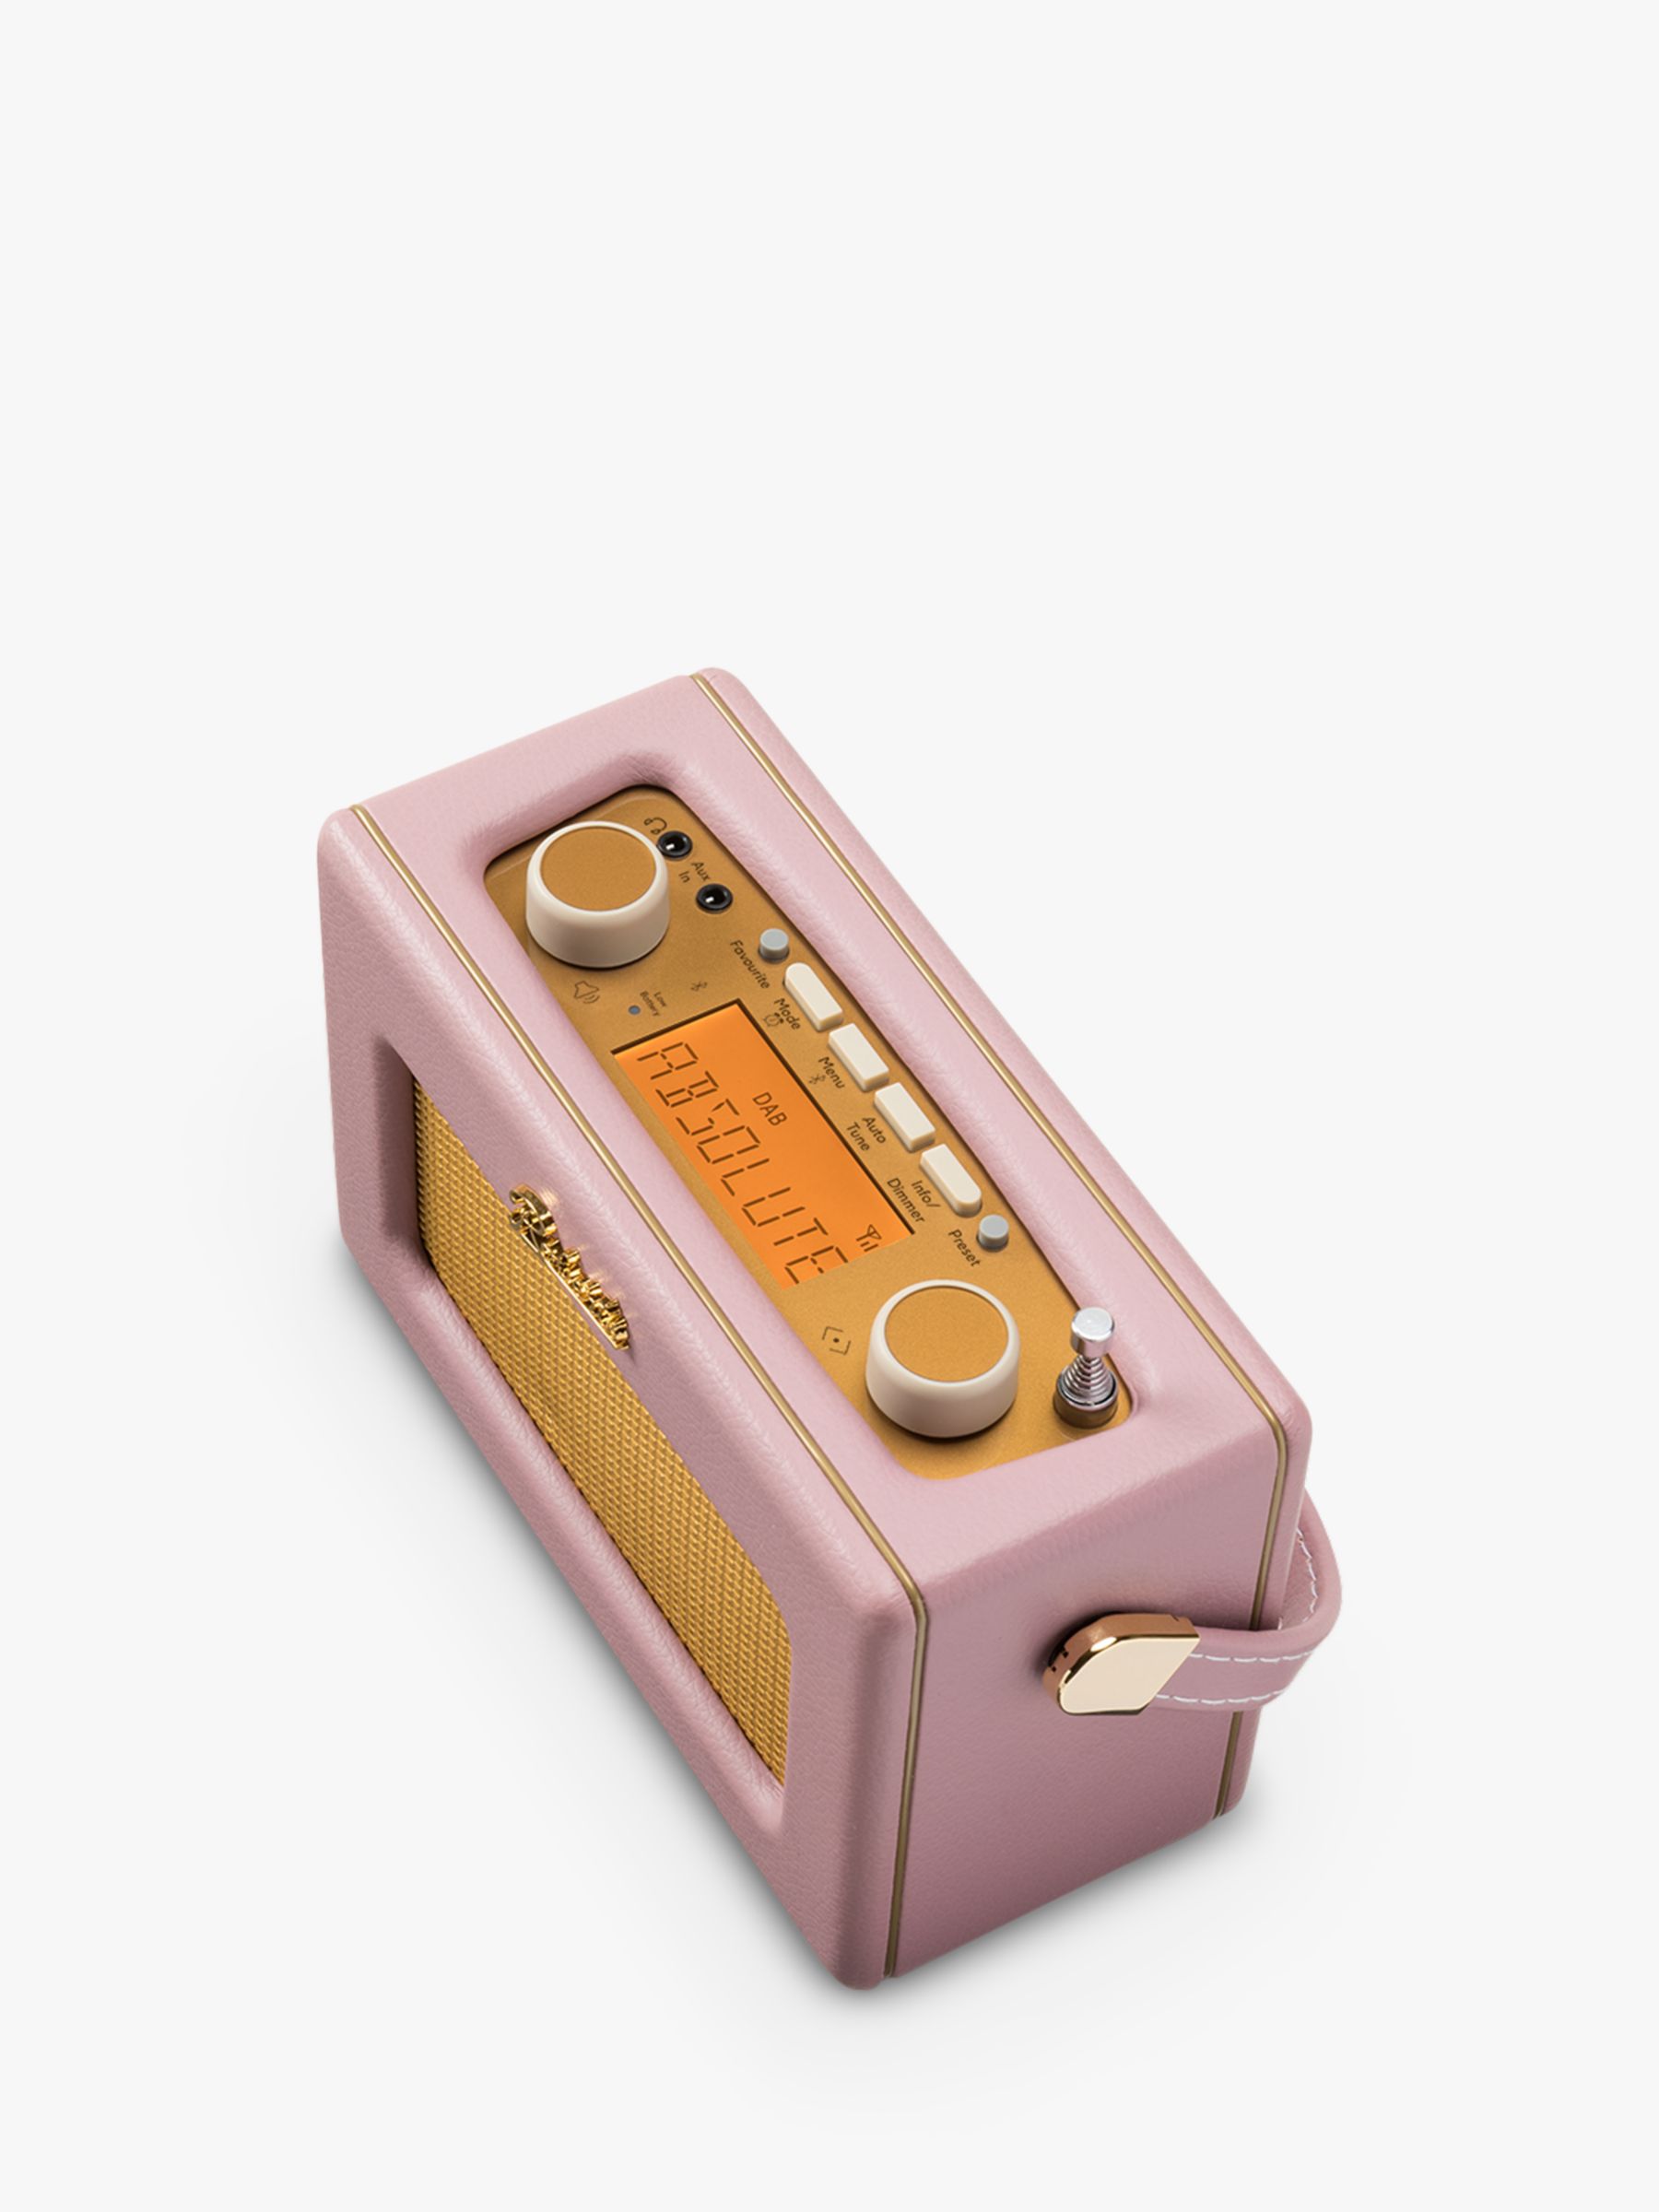 Roberts Revival Bluetooth Pastel BT Alarm, Digital Cream Uno DAB/DAB+/FM Radio with